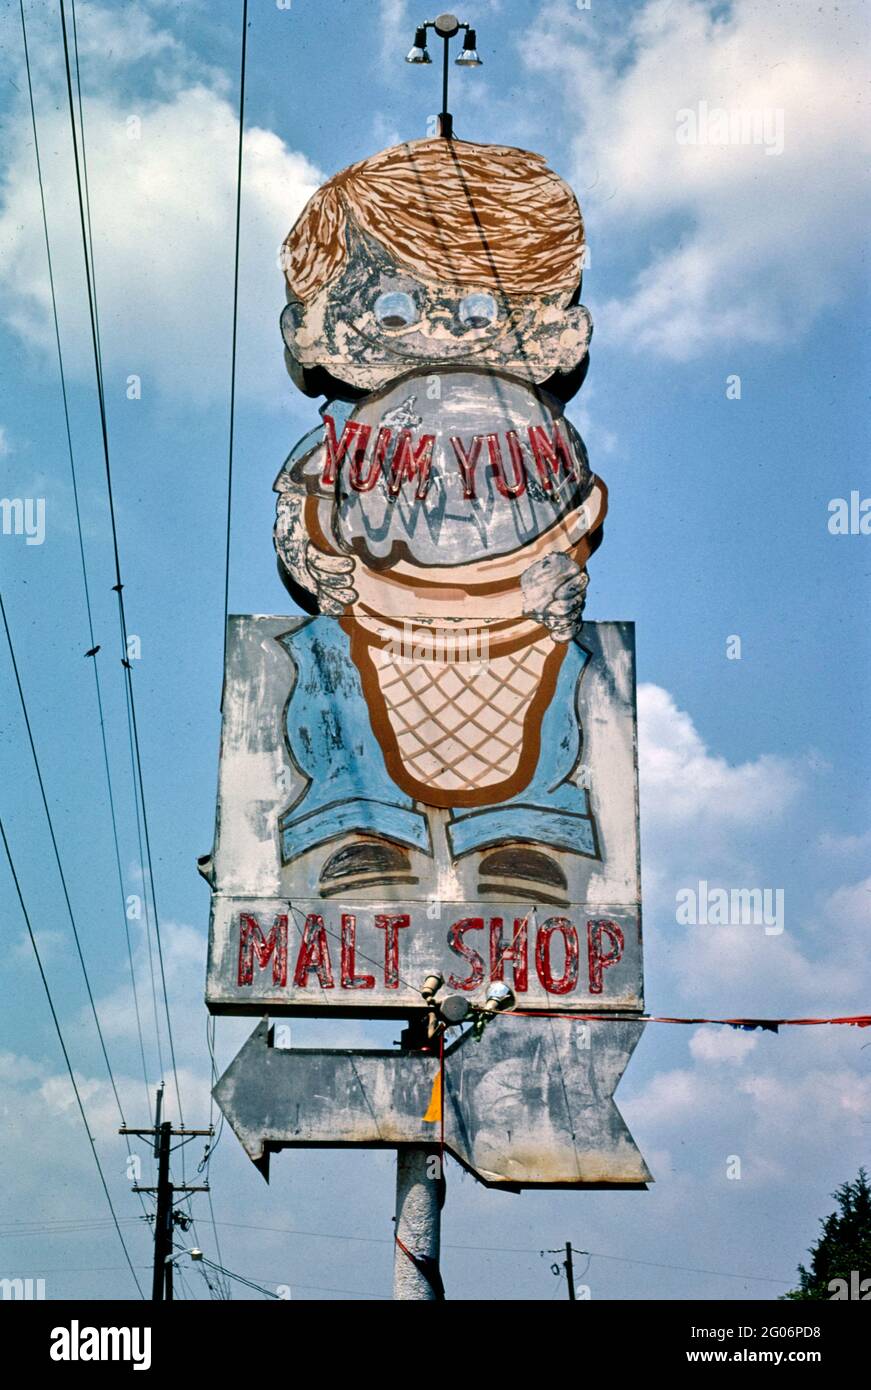 1980s America -  Yum Yum Malt Shop Drive-in sign, Bossier City, Louisiana 1982 Stock Photo